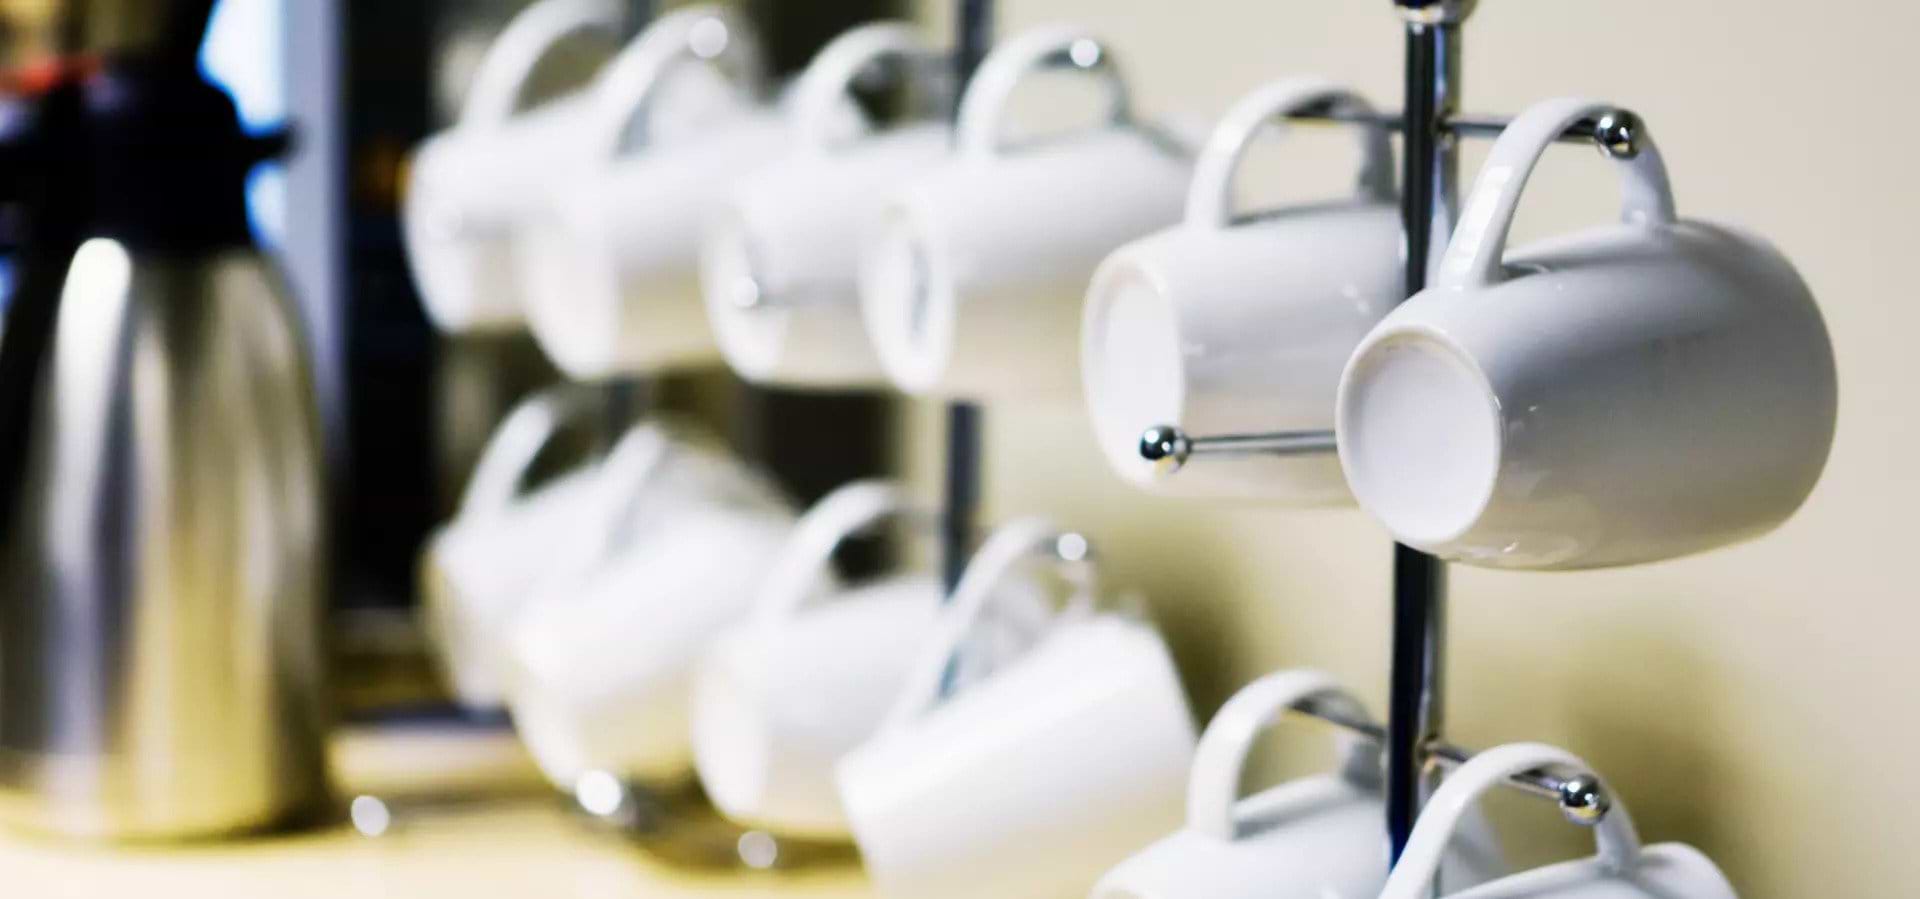 white-mugs-hanging-on-rack-in-office-breakroom